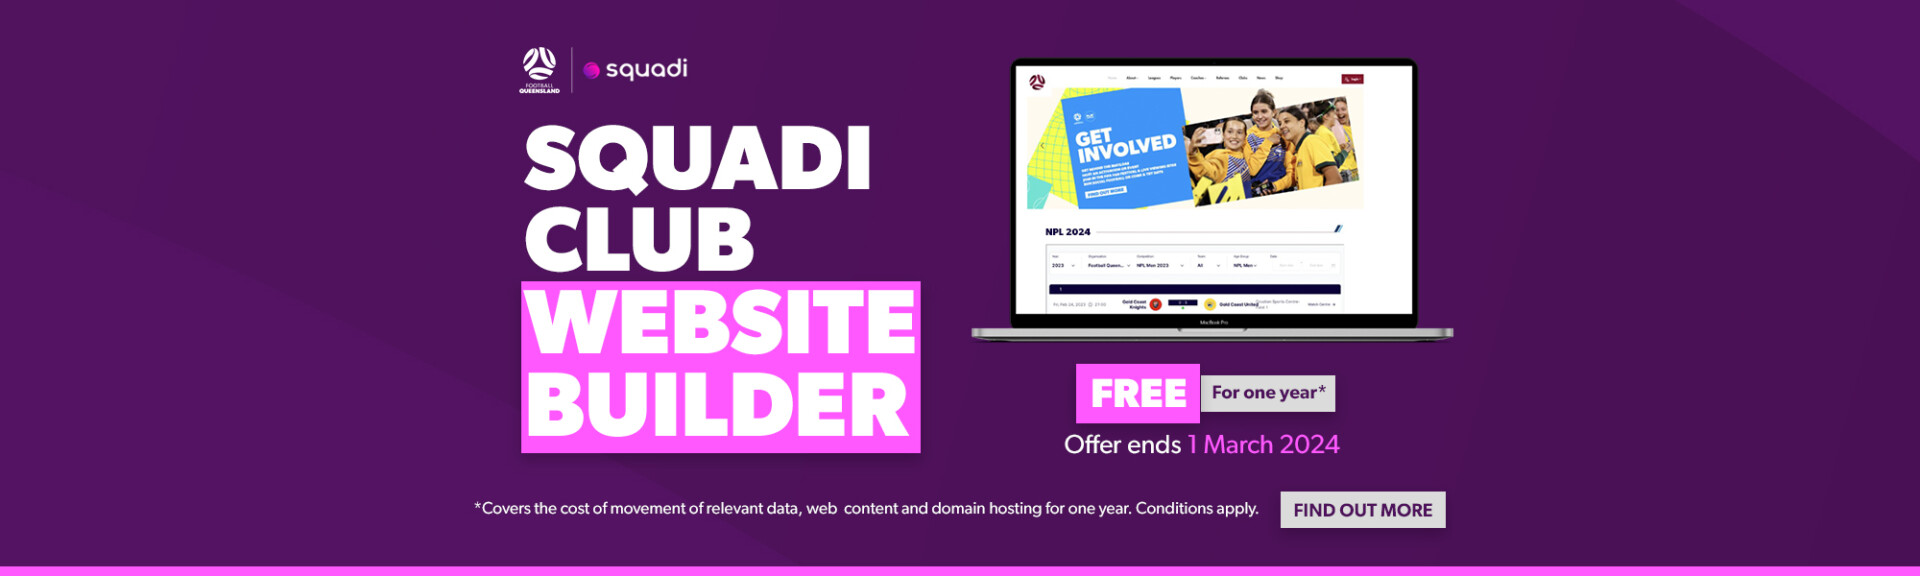 2401-Campaigns-Squadi-Club-Website-Builder-Web